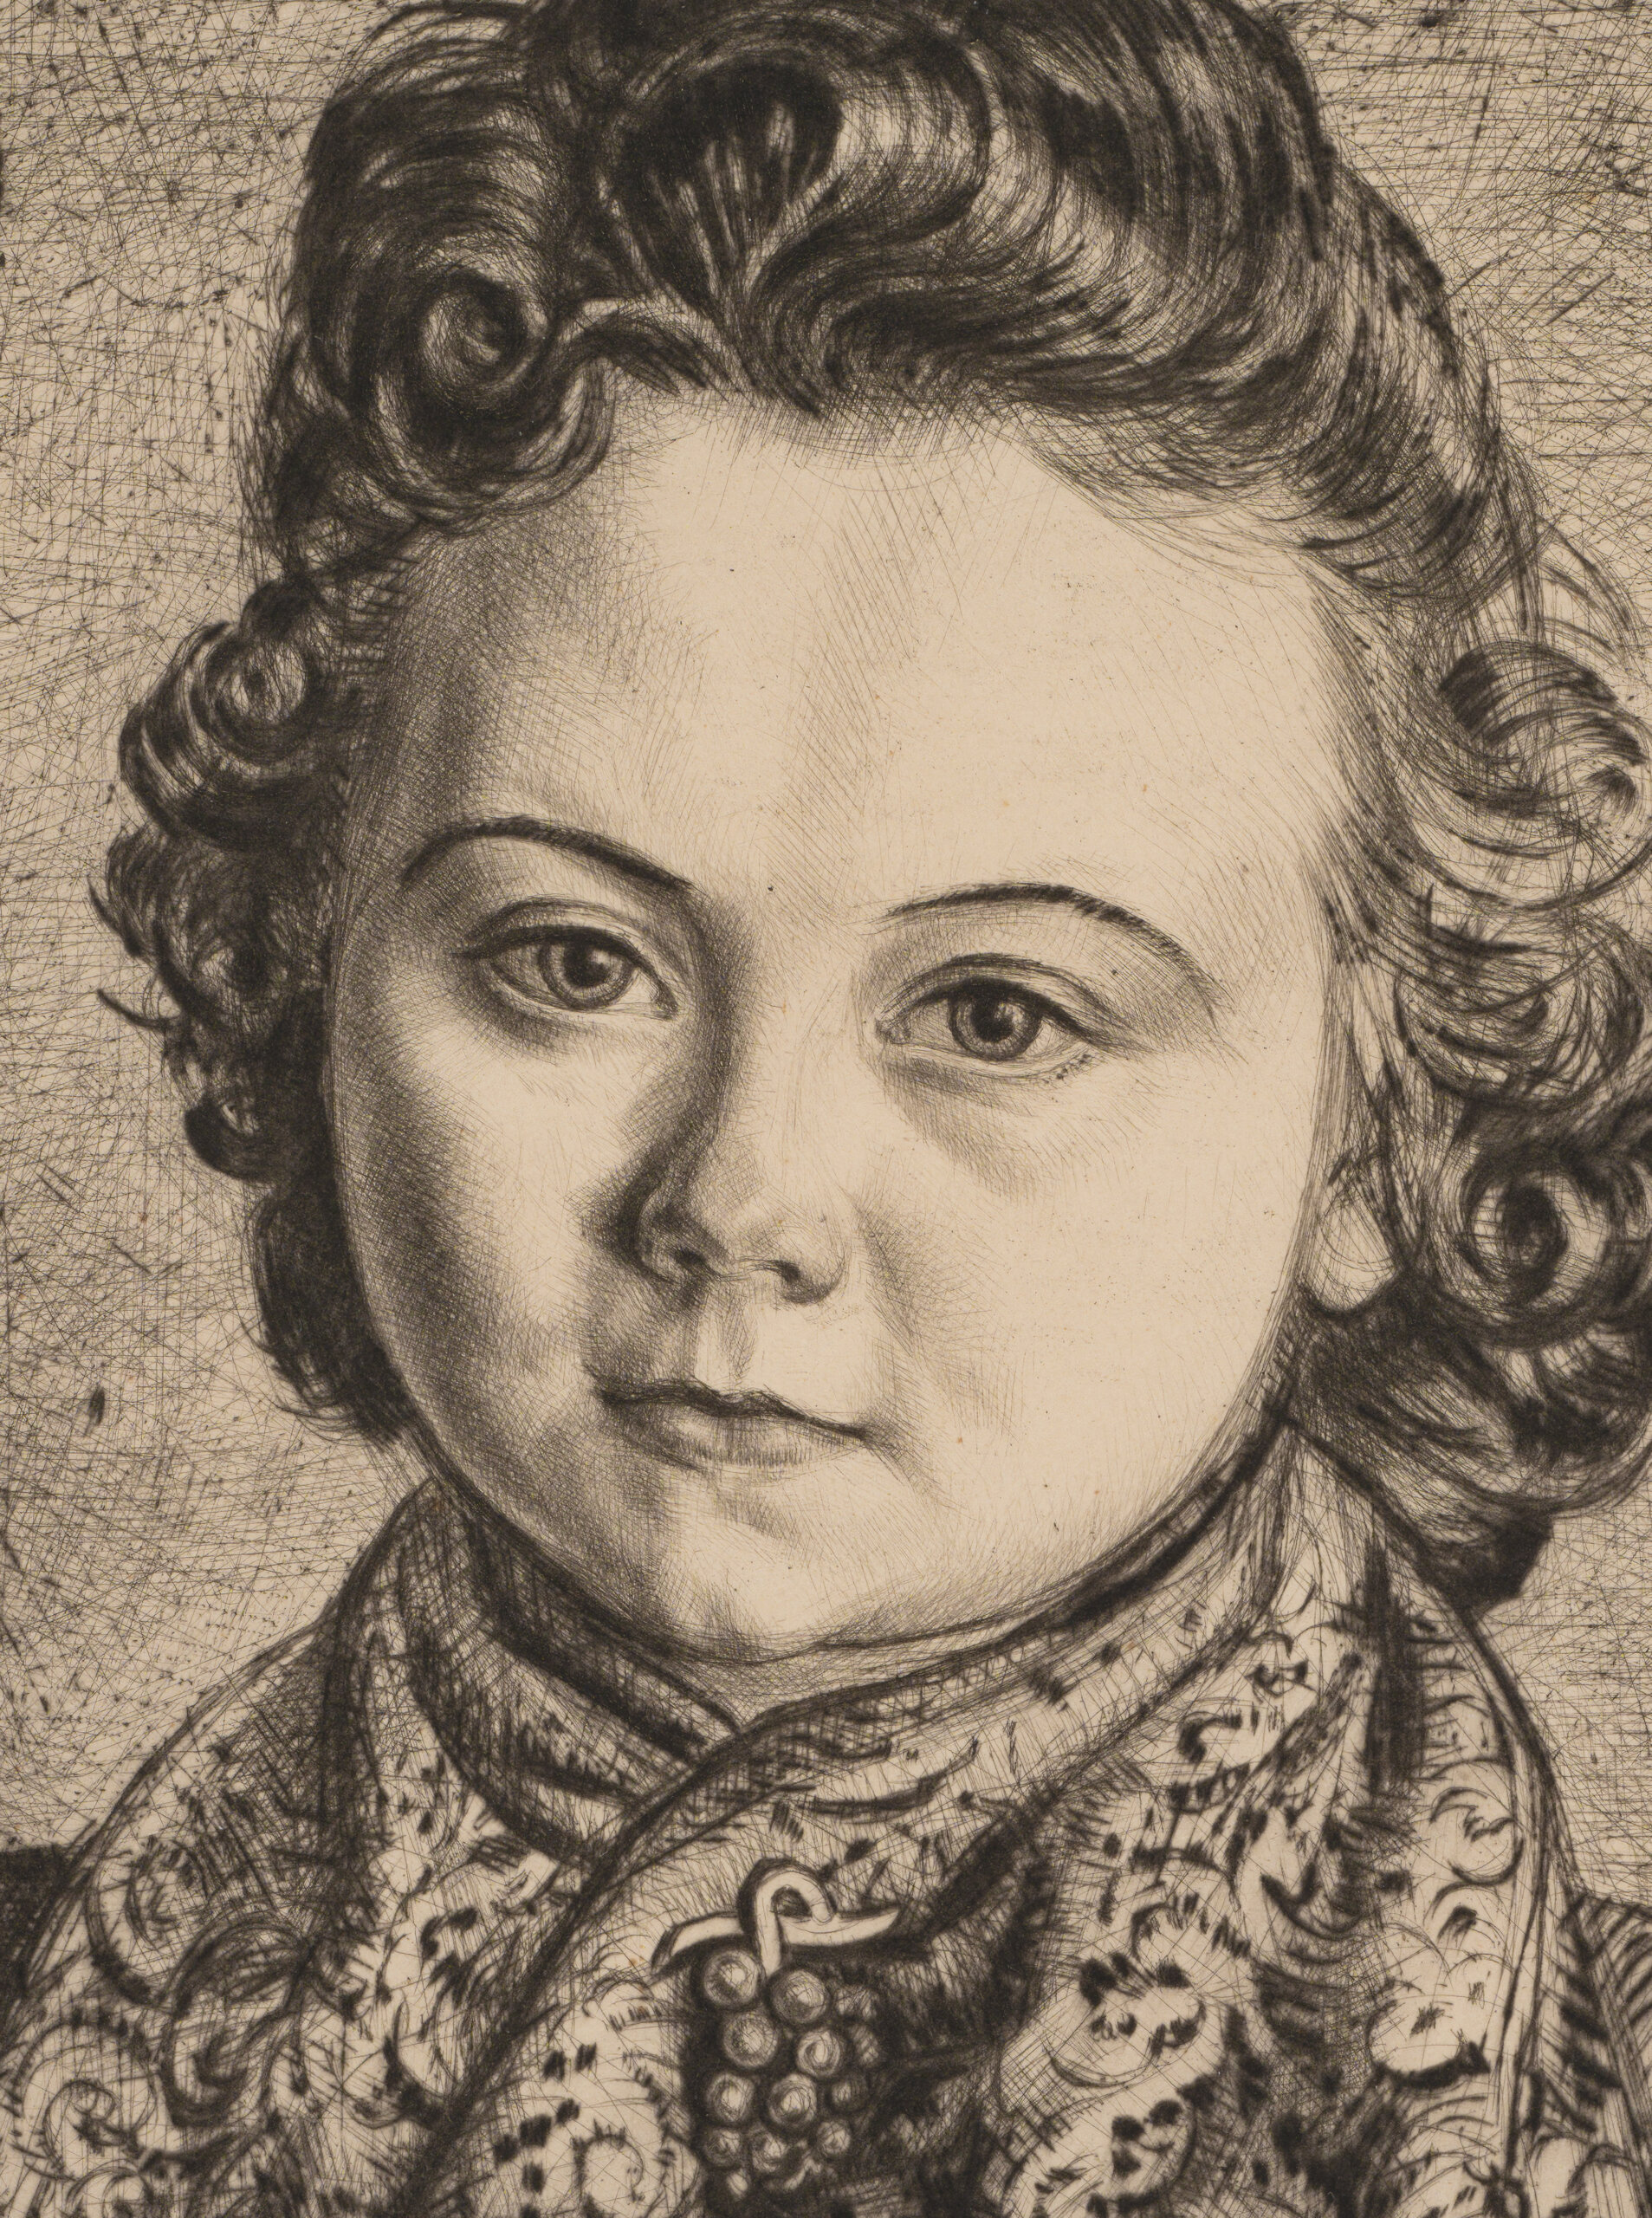 Eduard Wiiralt “Tütarlaps kirju salliga”, 1941. Plm 39,1 x 24,7 cm.